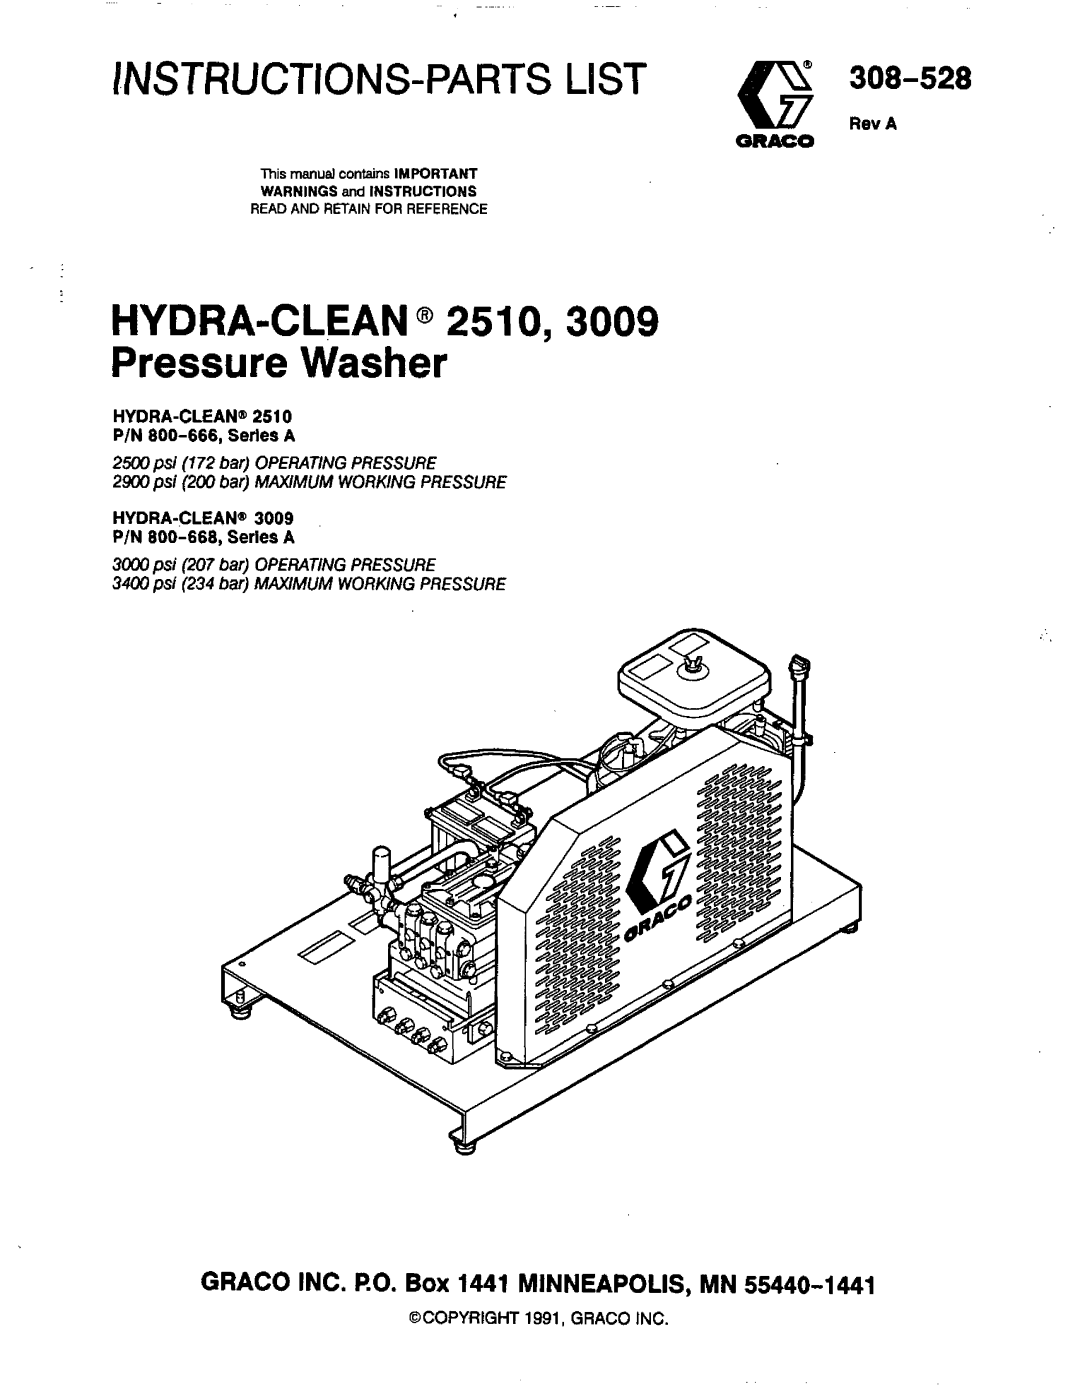 Graco Inc 800-666 manual Instructions-Parts List, HYDRA-CLEAN@ Pressure Washer, GRACO INC. RO. BOX1441 MINNEAPOLIS, MN 